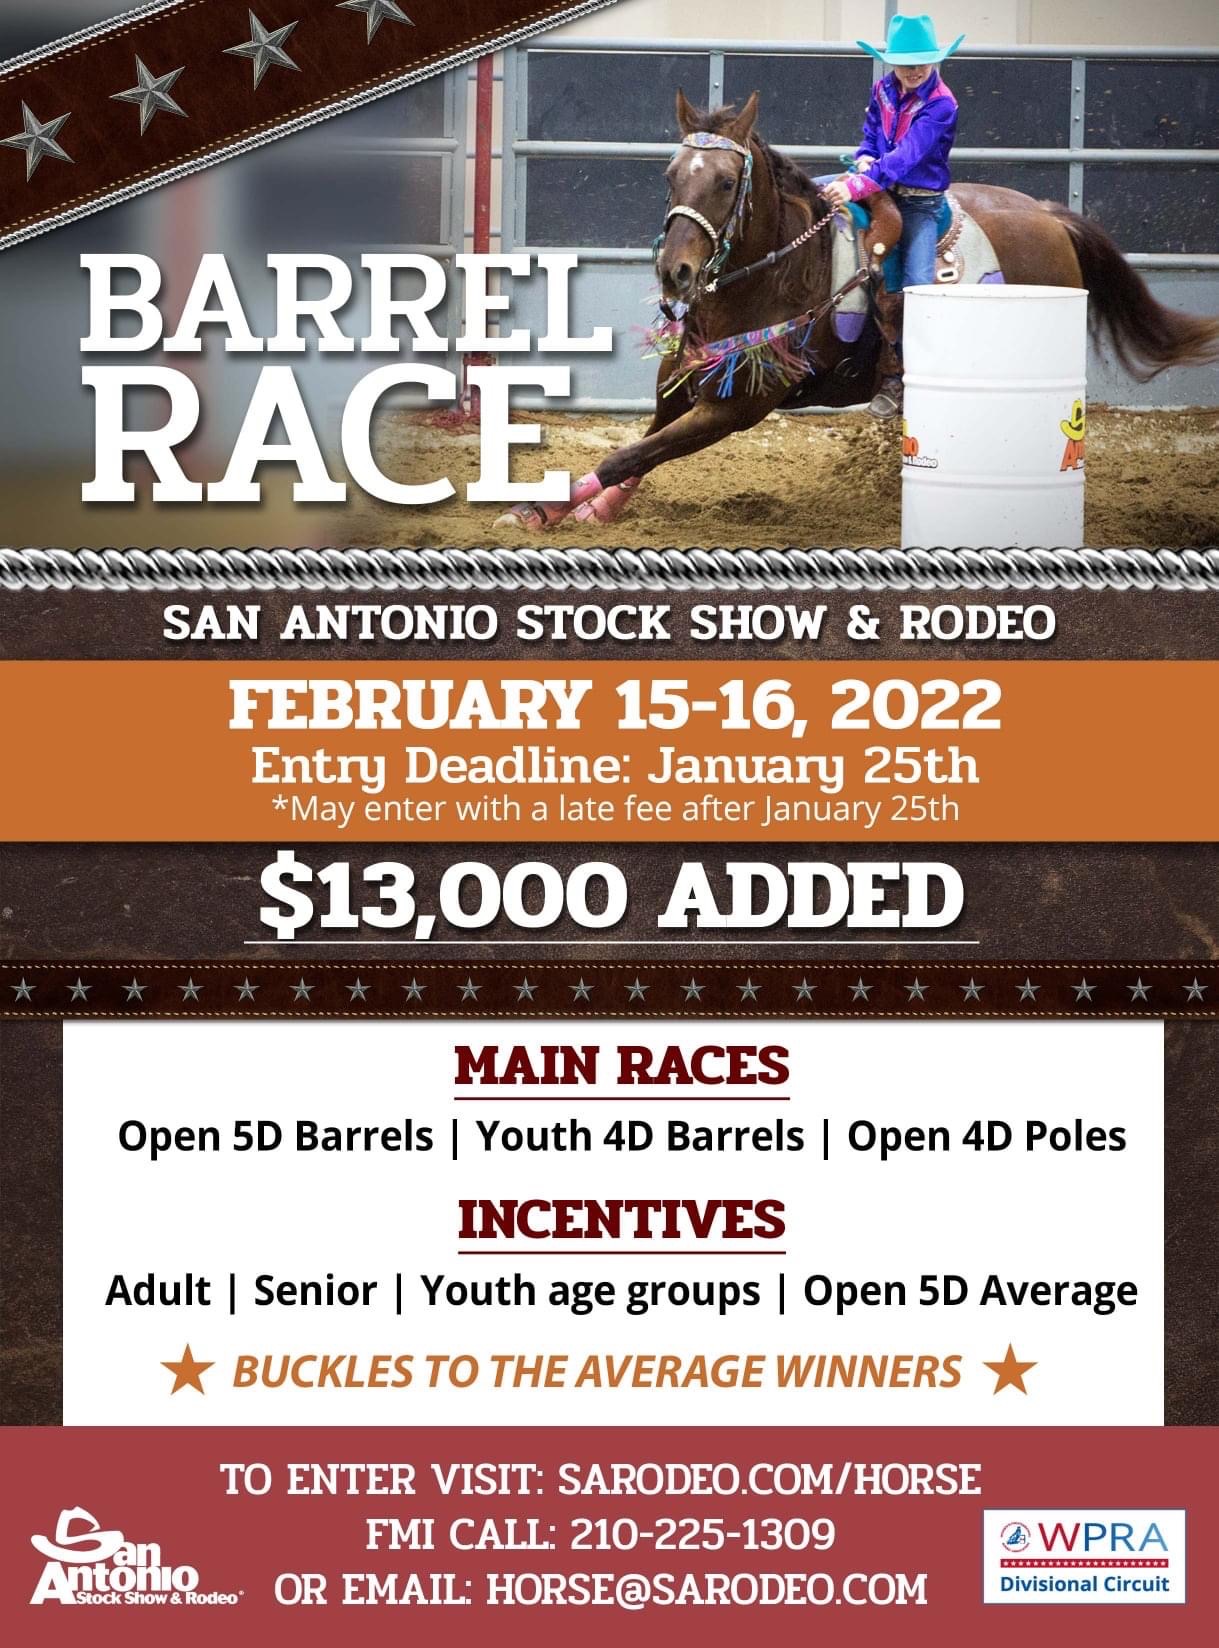 San Antonio Stock Show & Rodeo BARREL RACE